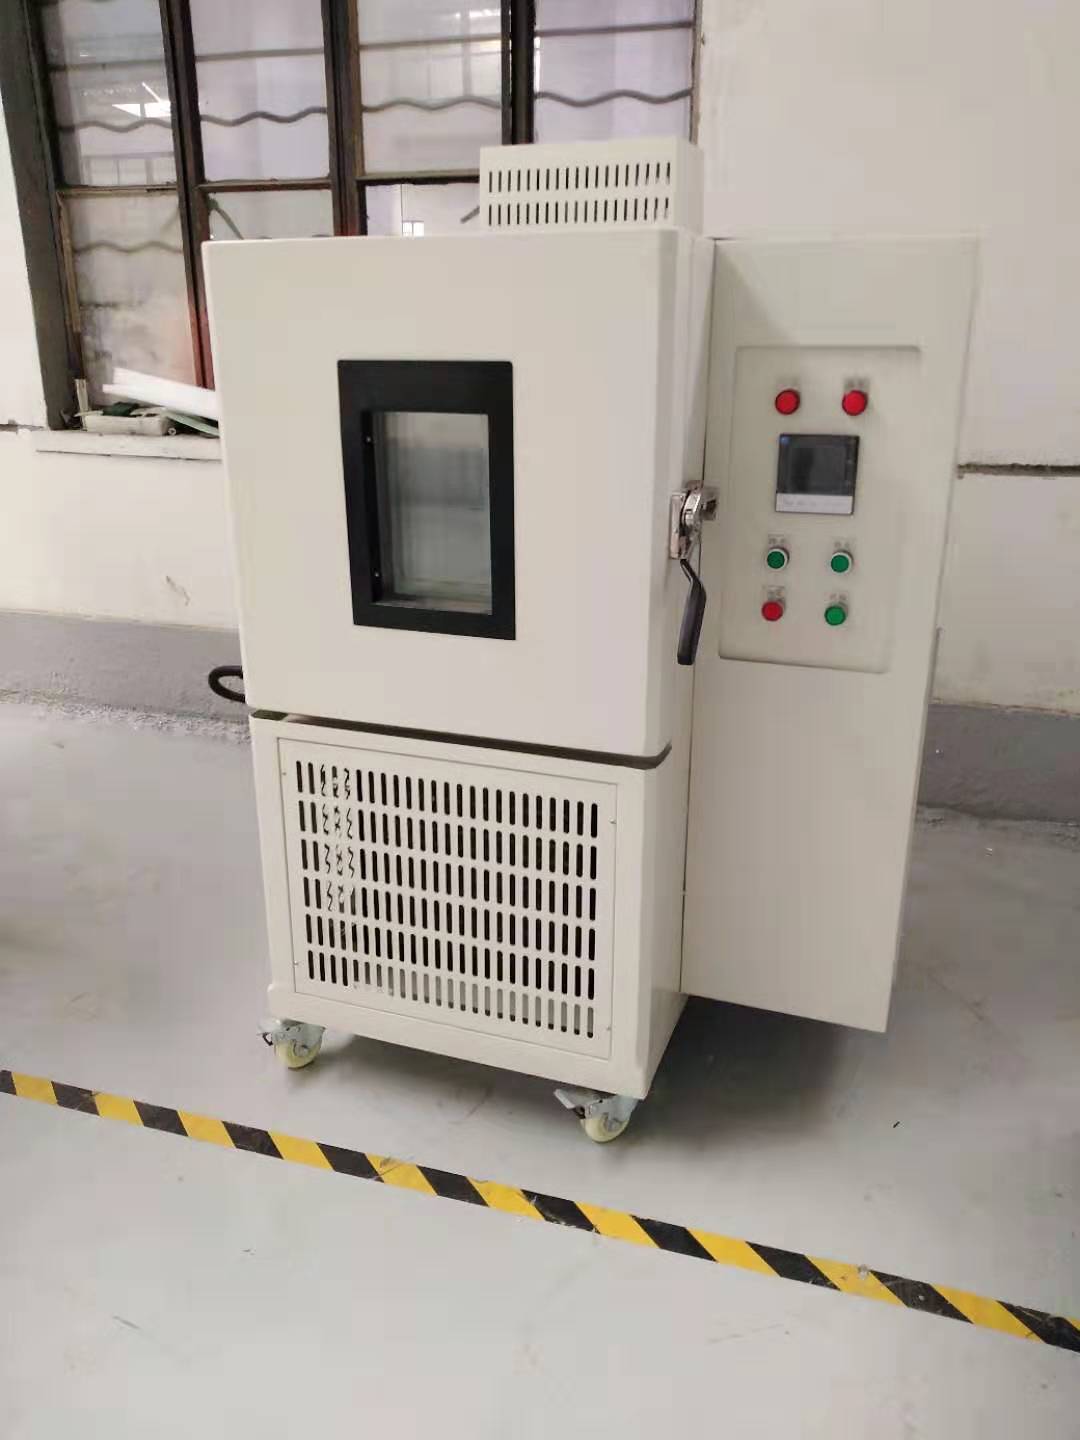 GDJ可编程控制系统高低温交变试验箱 高低温试验箱